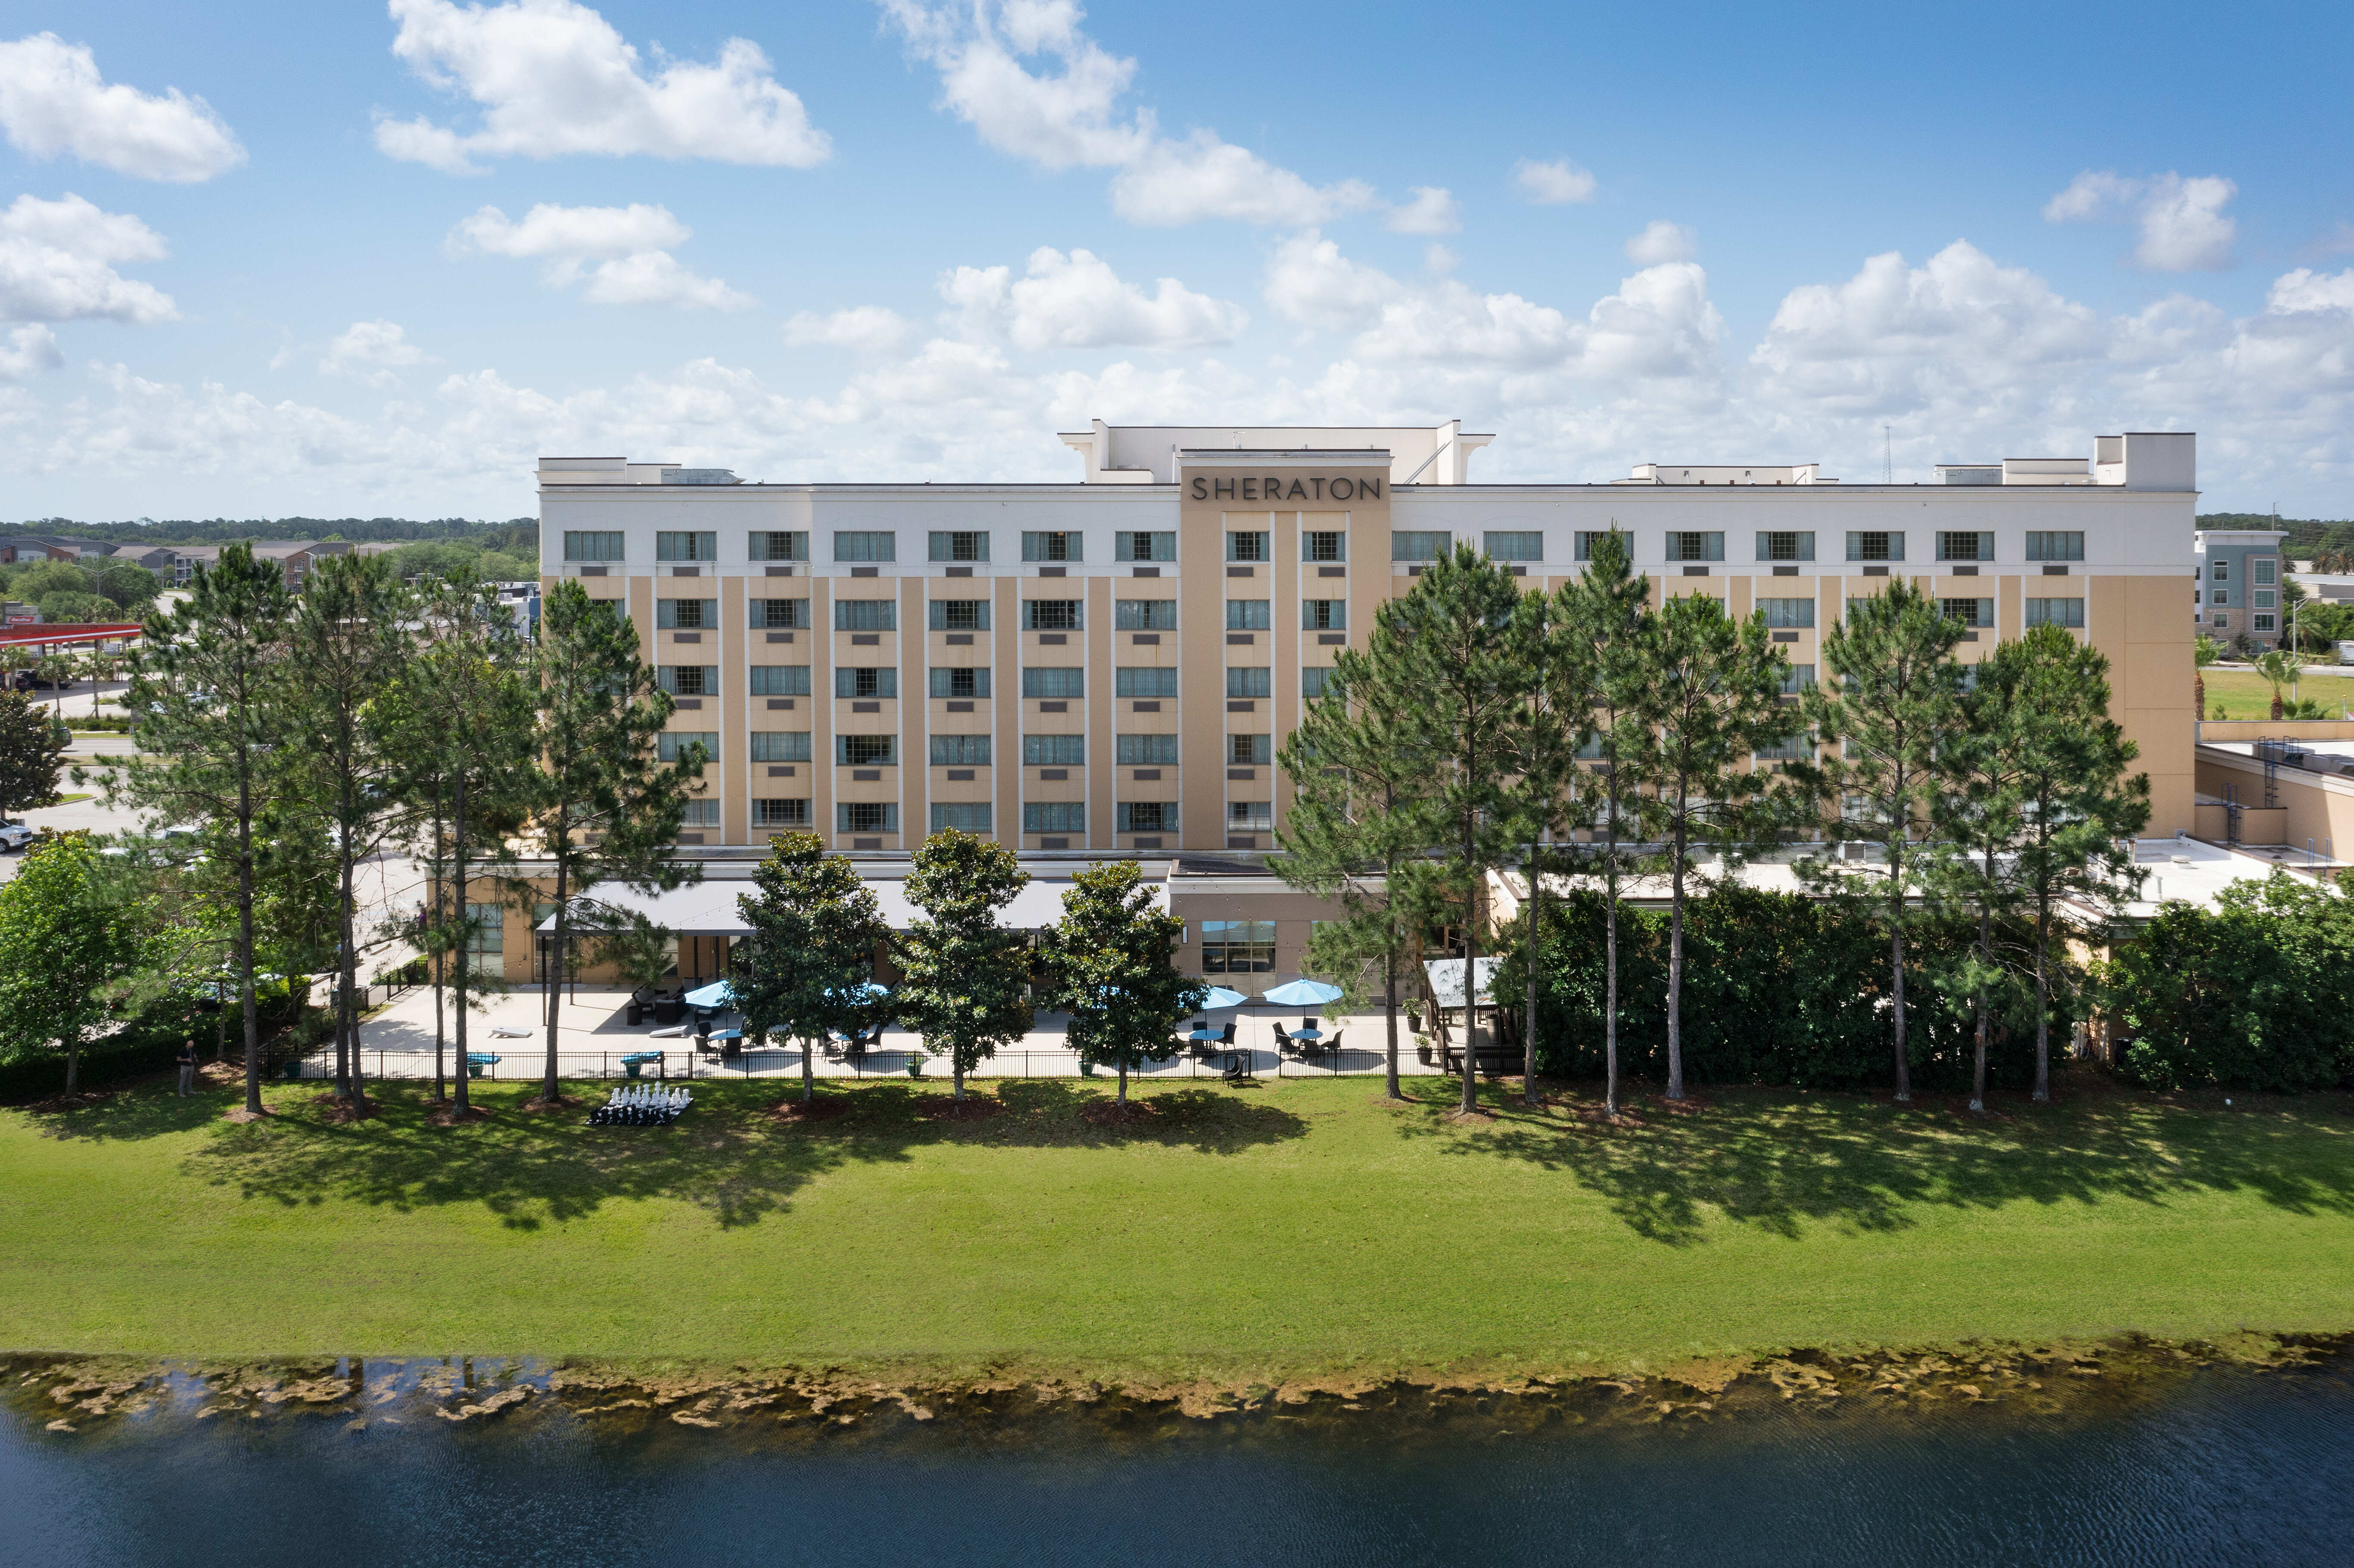 Photo of Sheraton Jacksonville Hotel, Jacksonville, FL